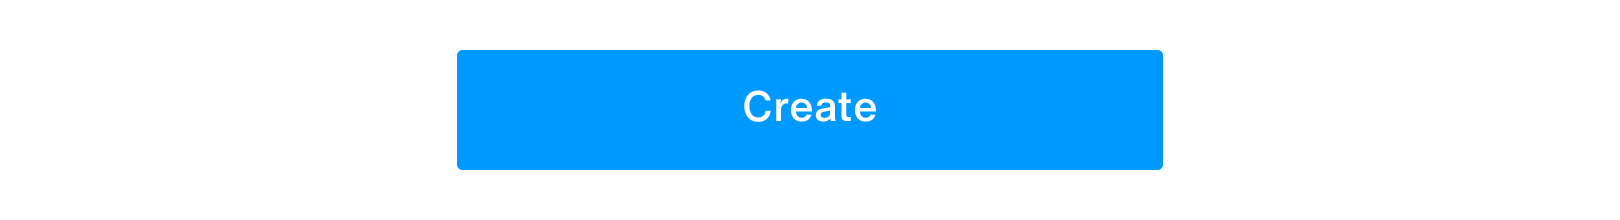 Create Button 01